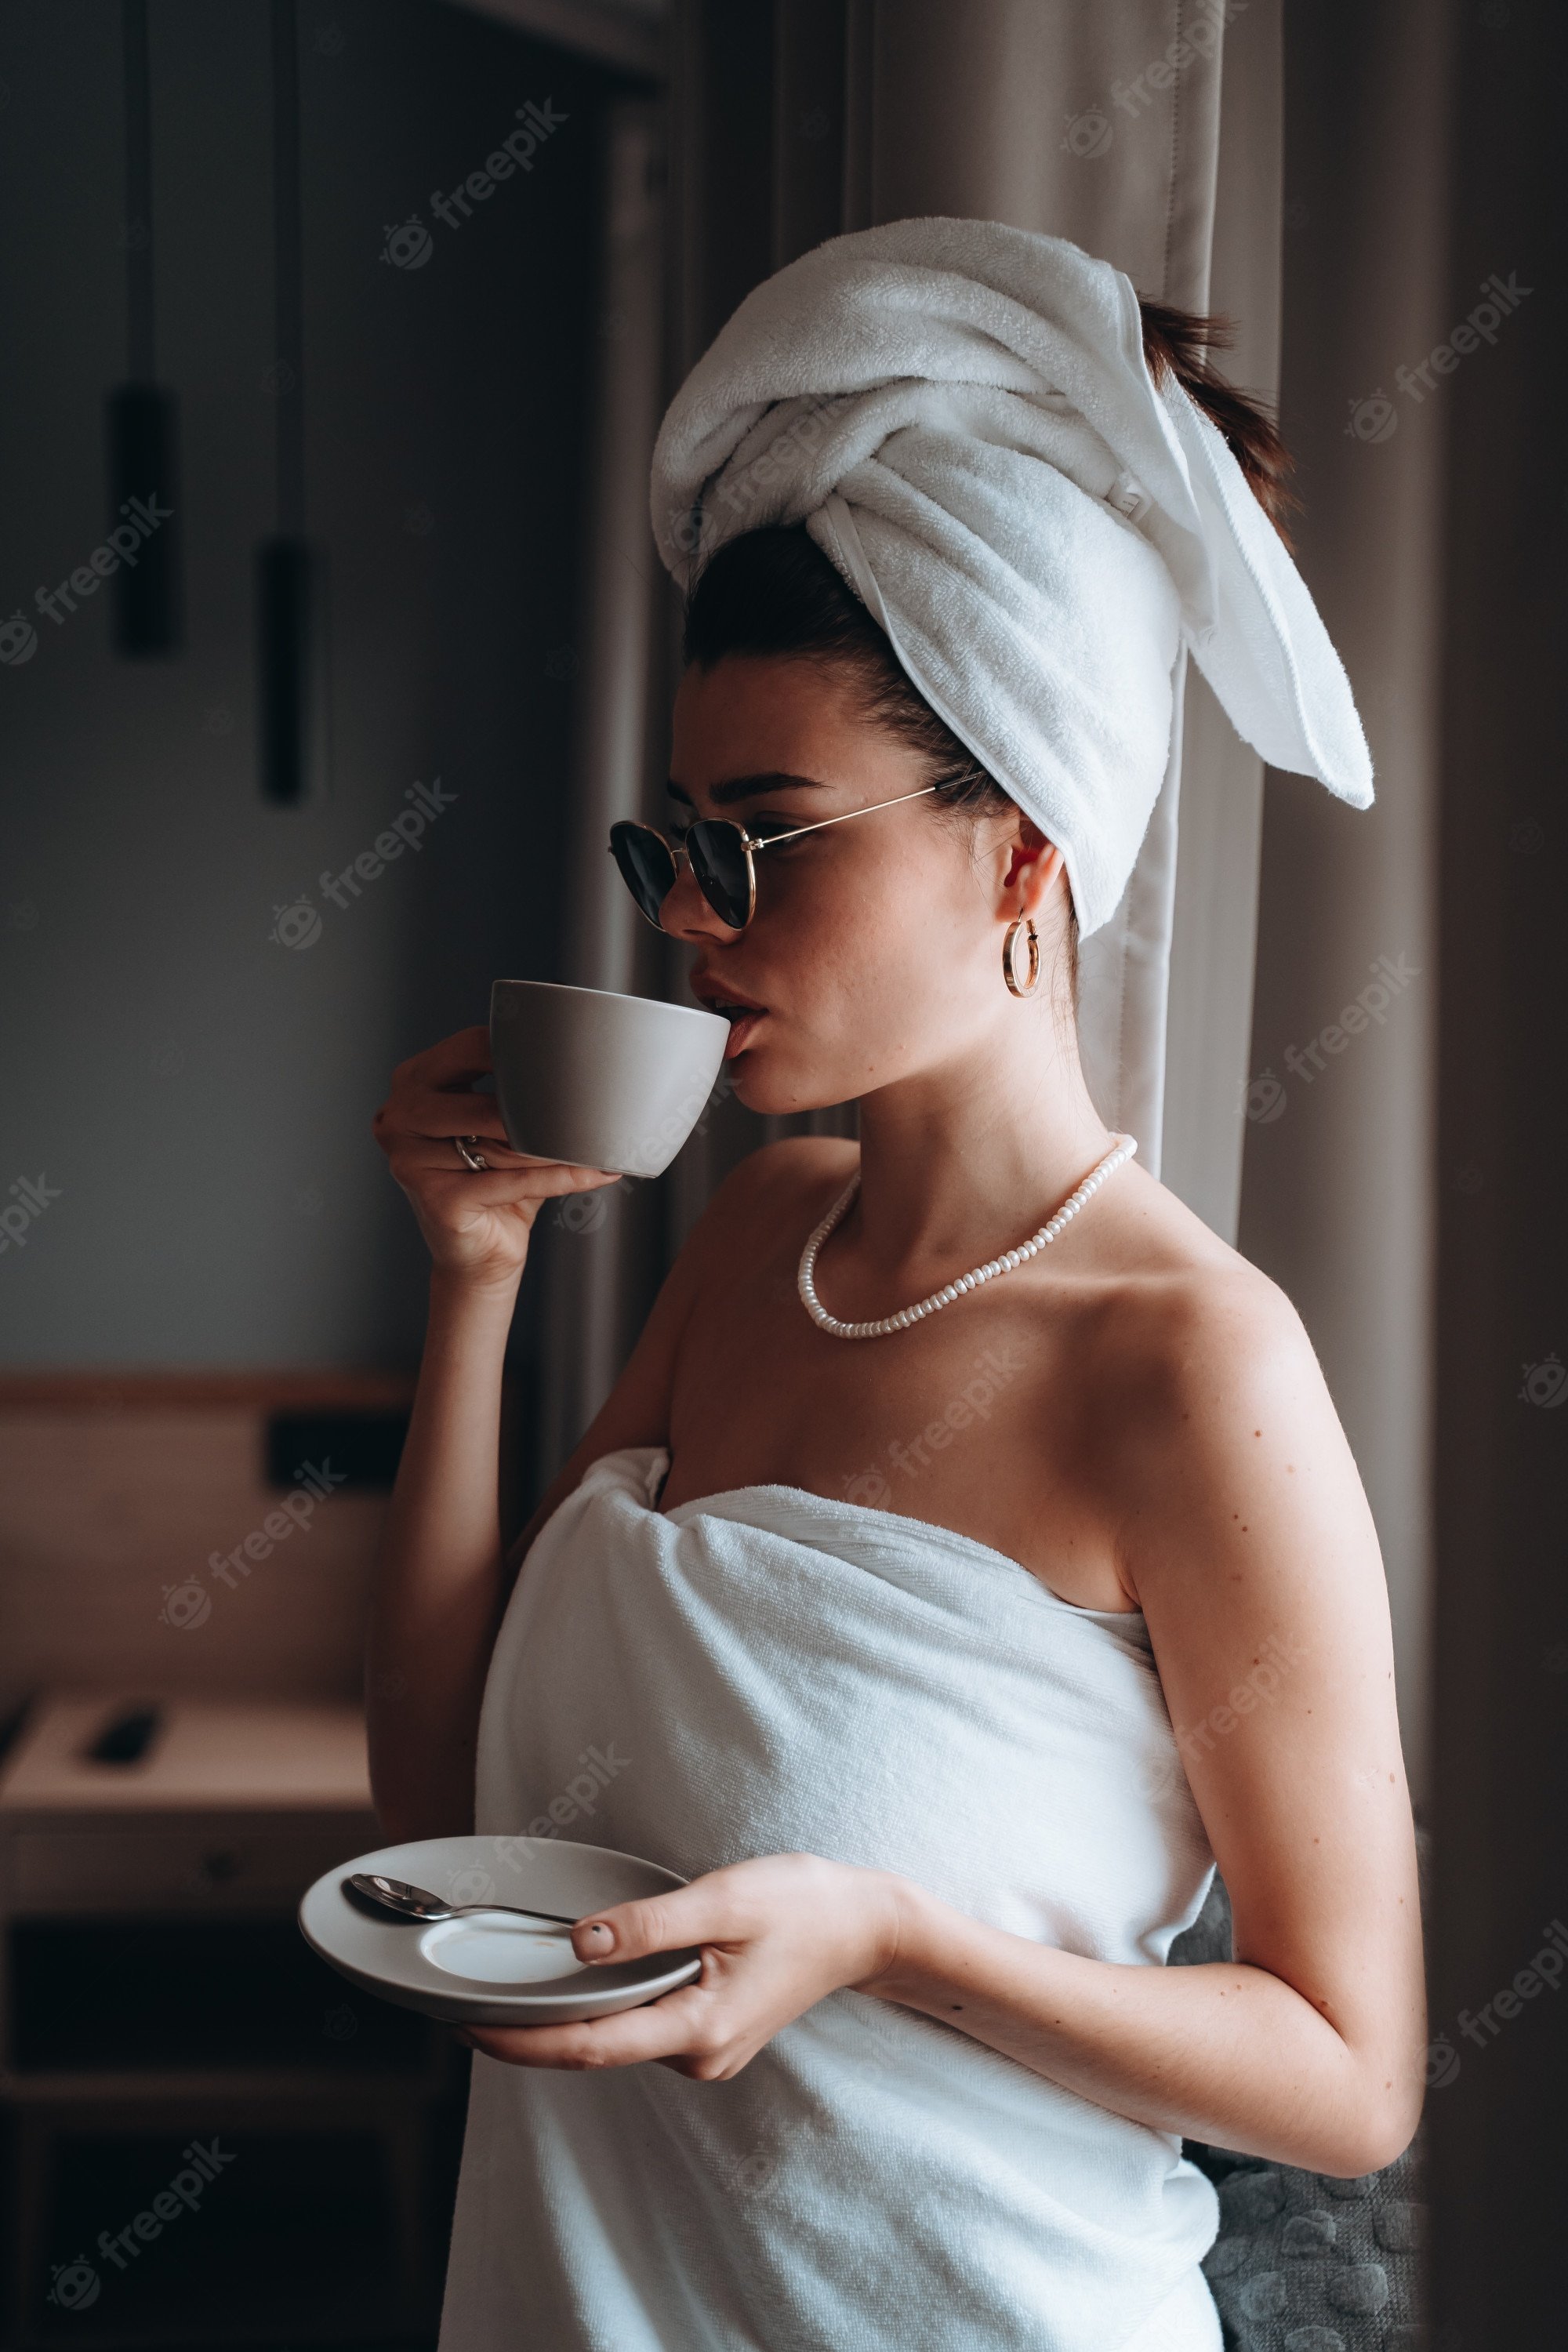 Девочка в полотенце. Женщина с полотенцем на голове. Девушка в полотенце. Фотосессия в полотенце. Фотосессия полотенце девушка.